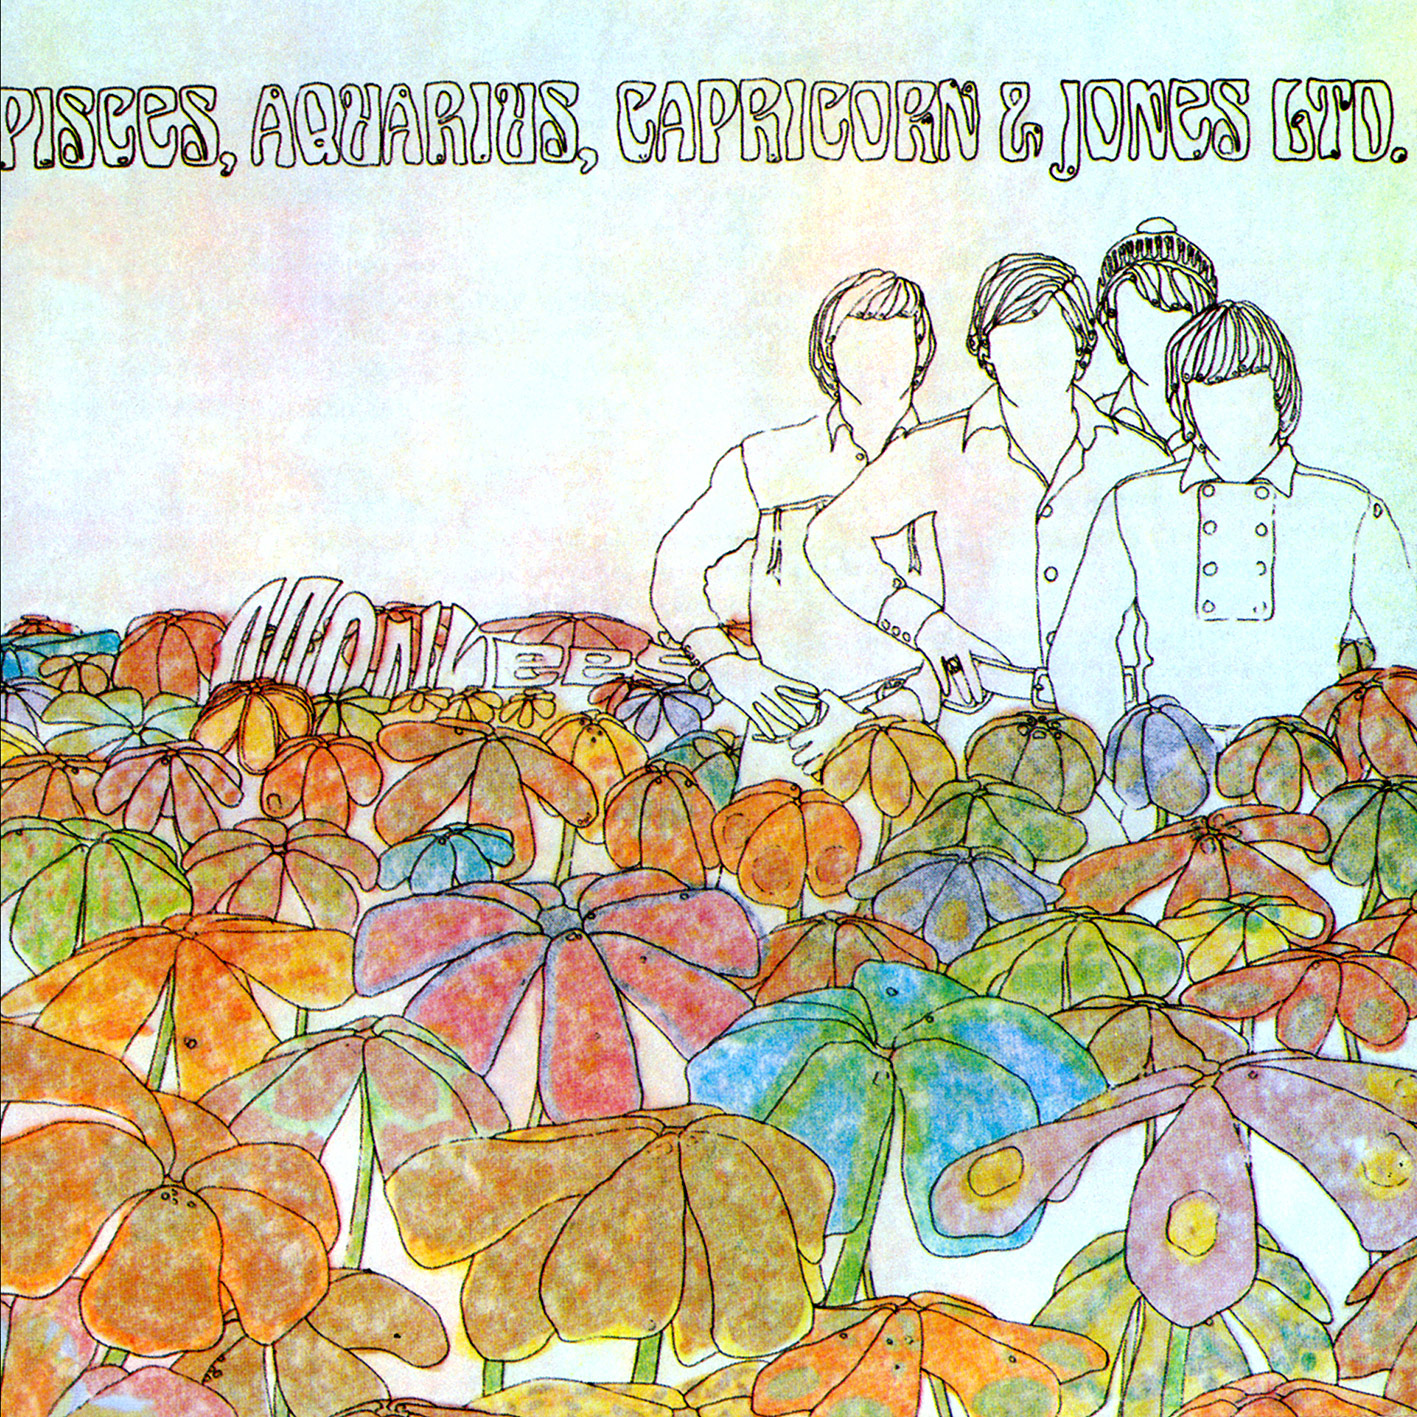 The Monkees - Pisces, Aquarius, Capricorn & Jones Ltd. (1967/2013) [HDTracks FLAC 24bit/96kHz]